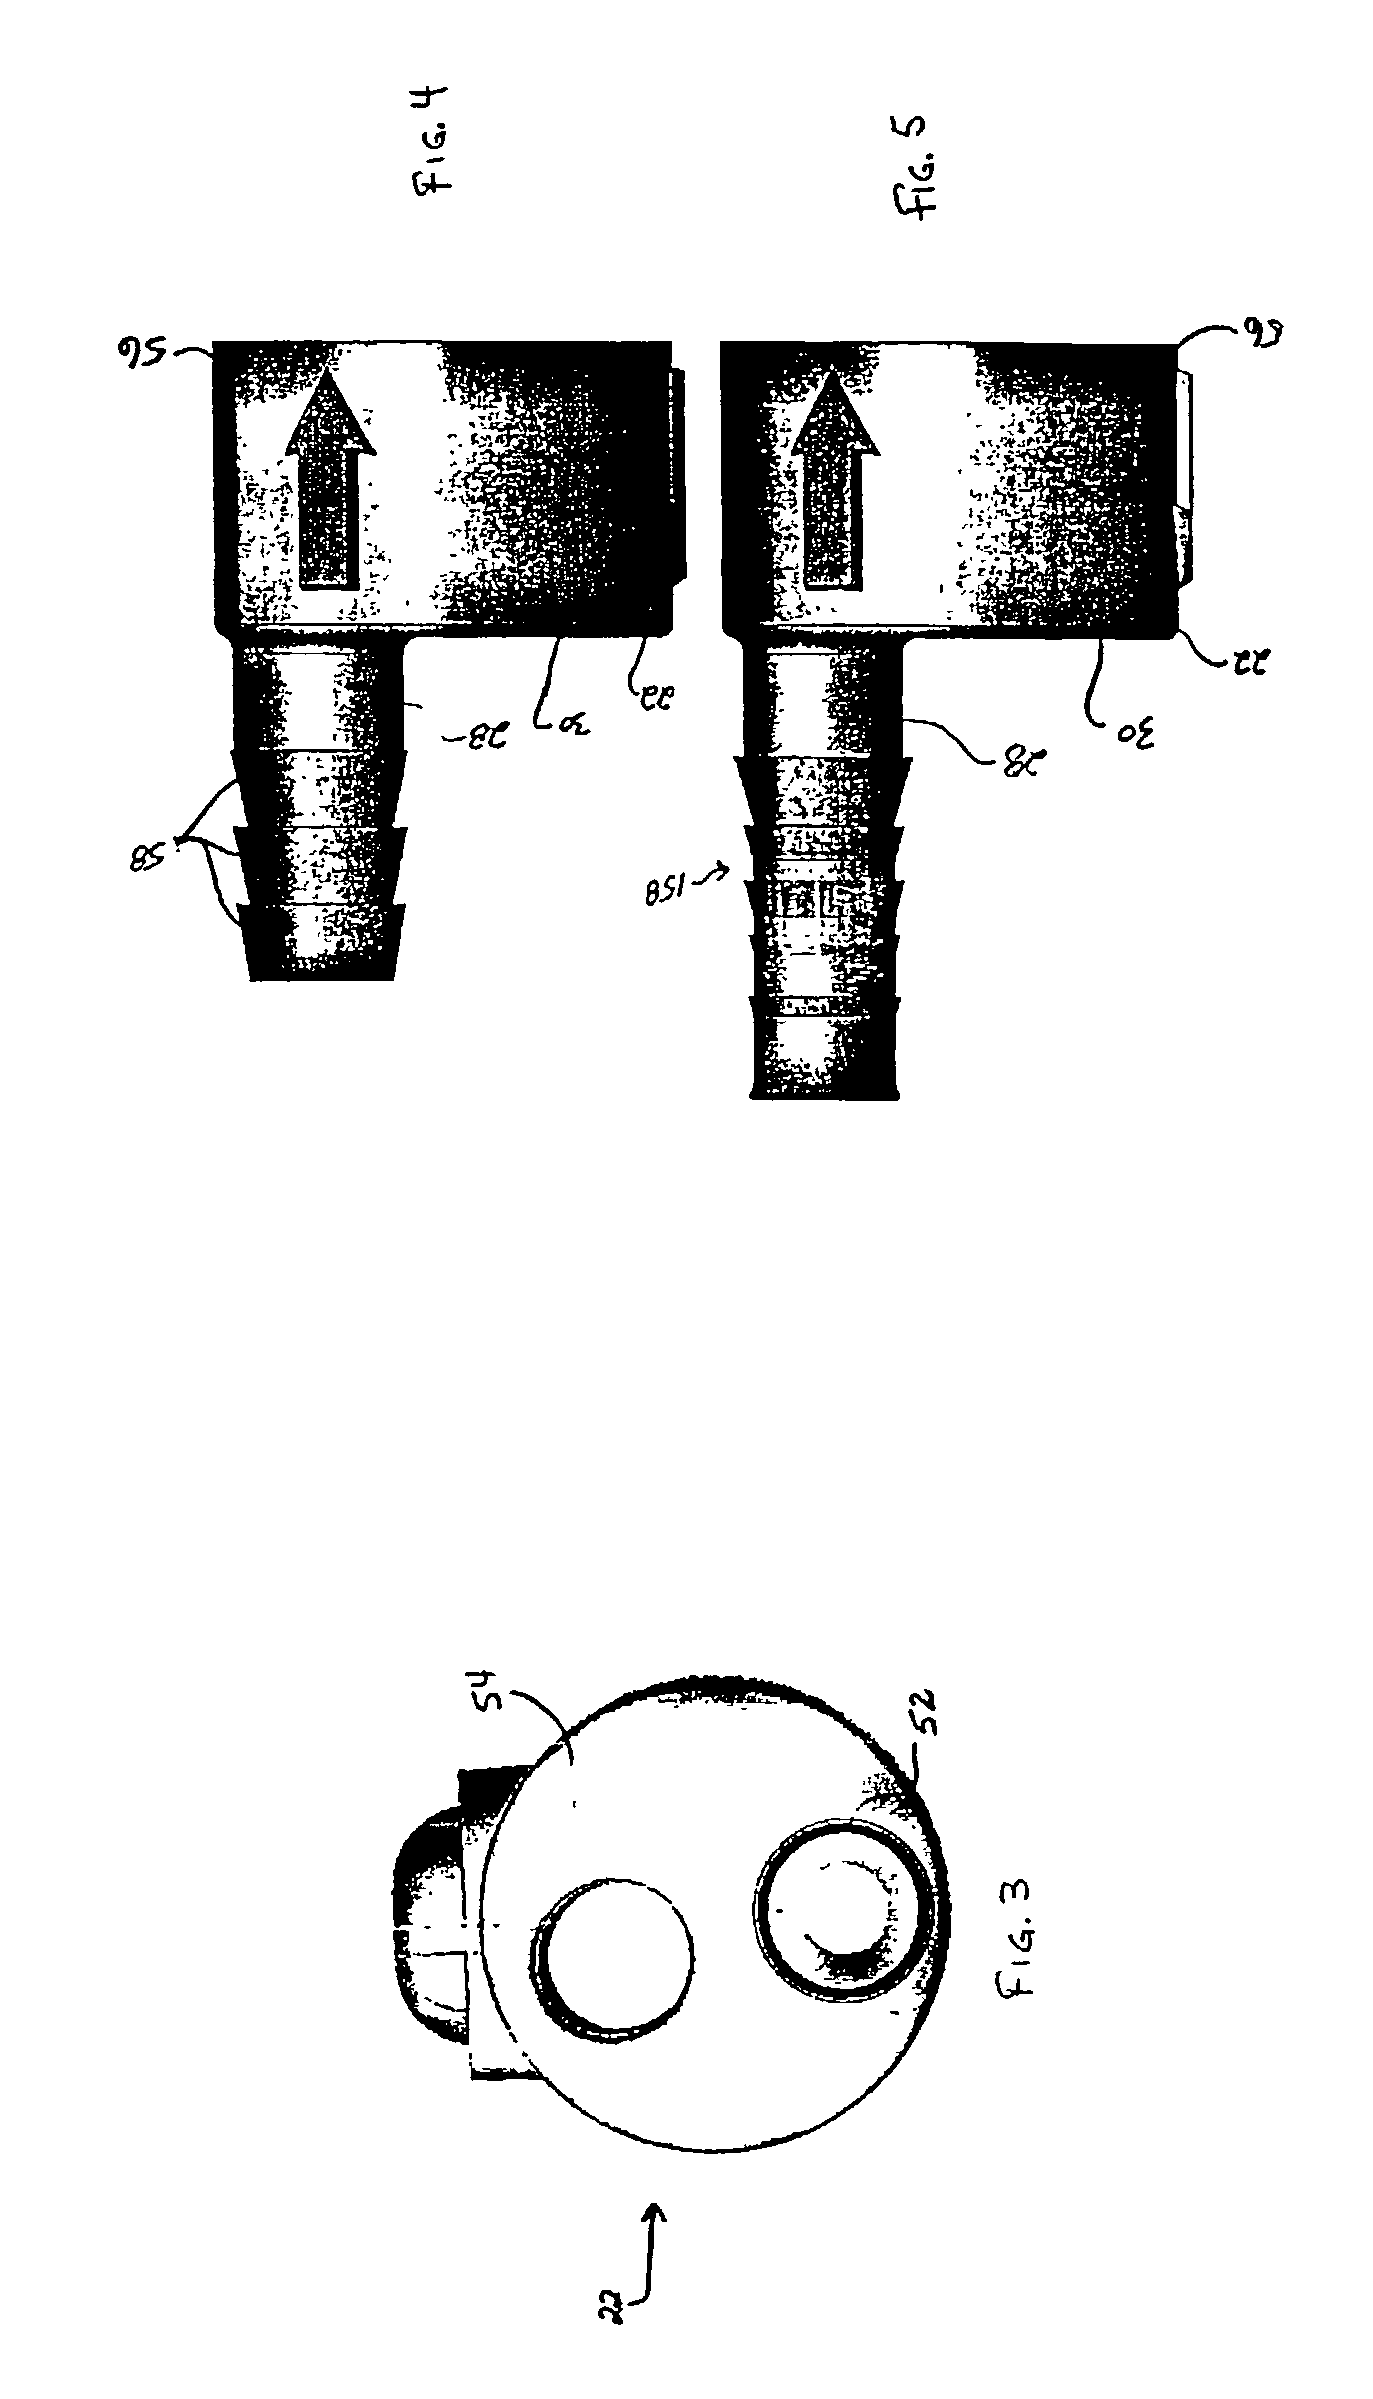 Automatic valve